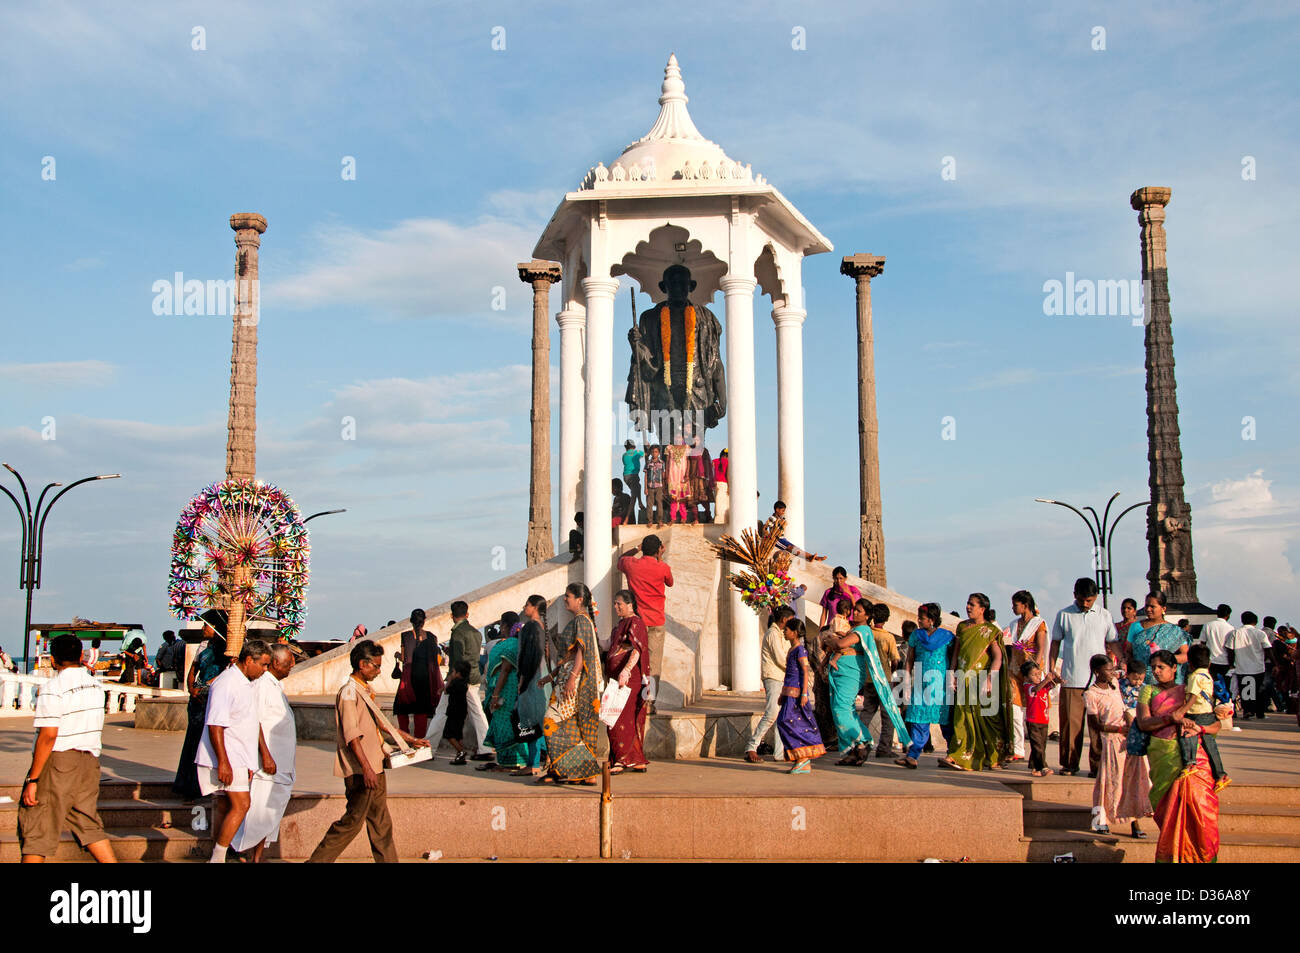 Il Mahatma Gandhi statua sul lungomare di Pondicherry ( Puducherry ) India Tamil Nadu Foto Stock